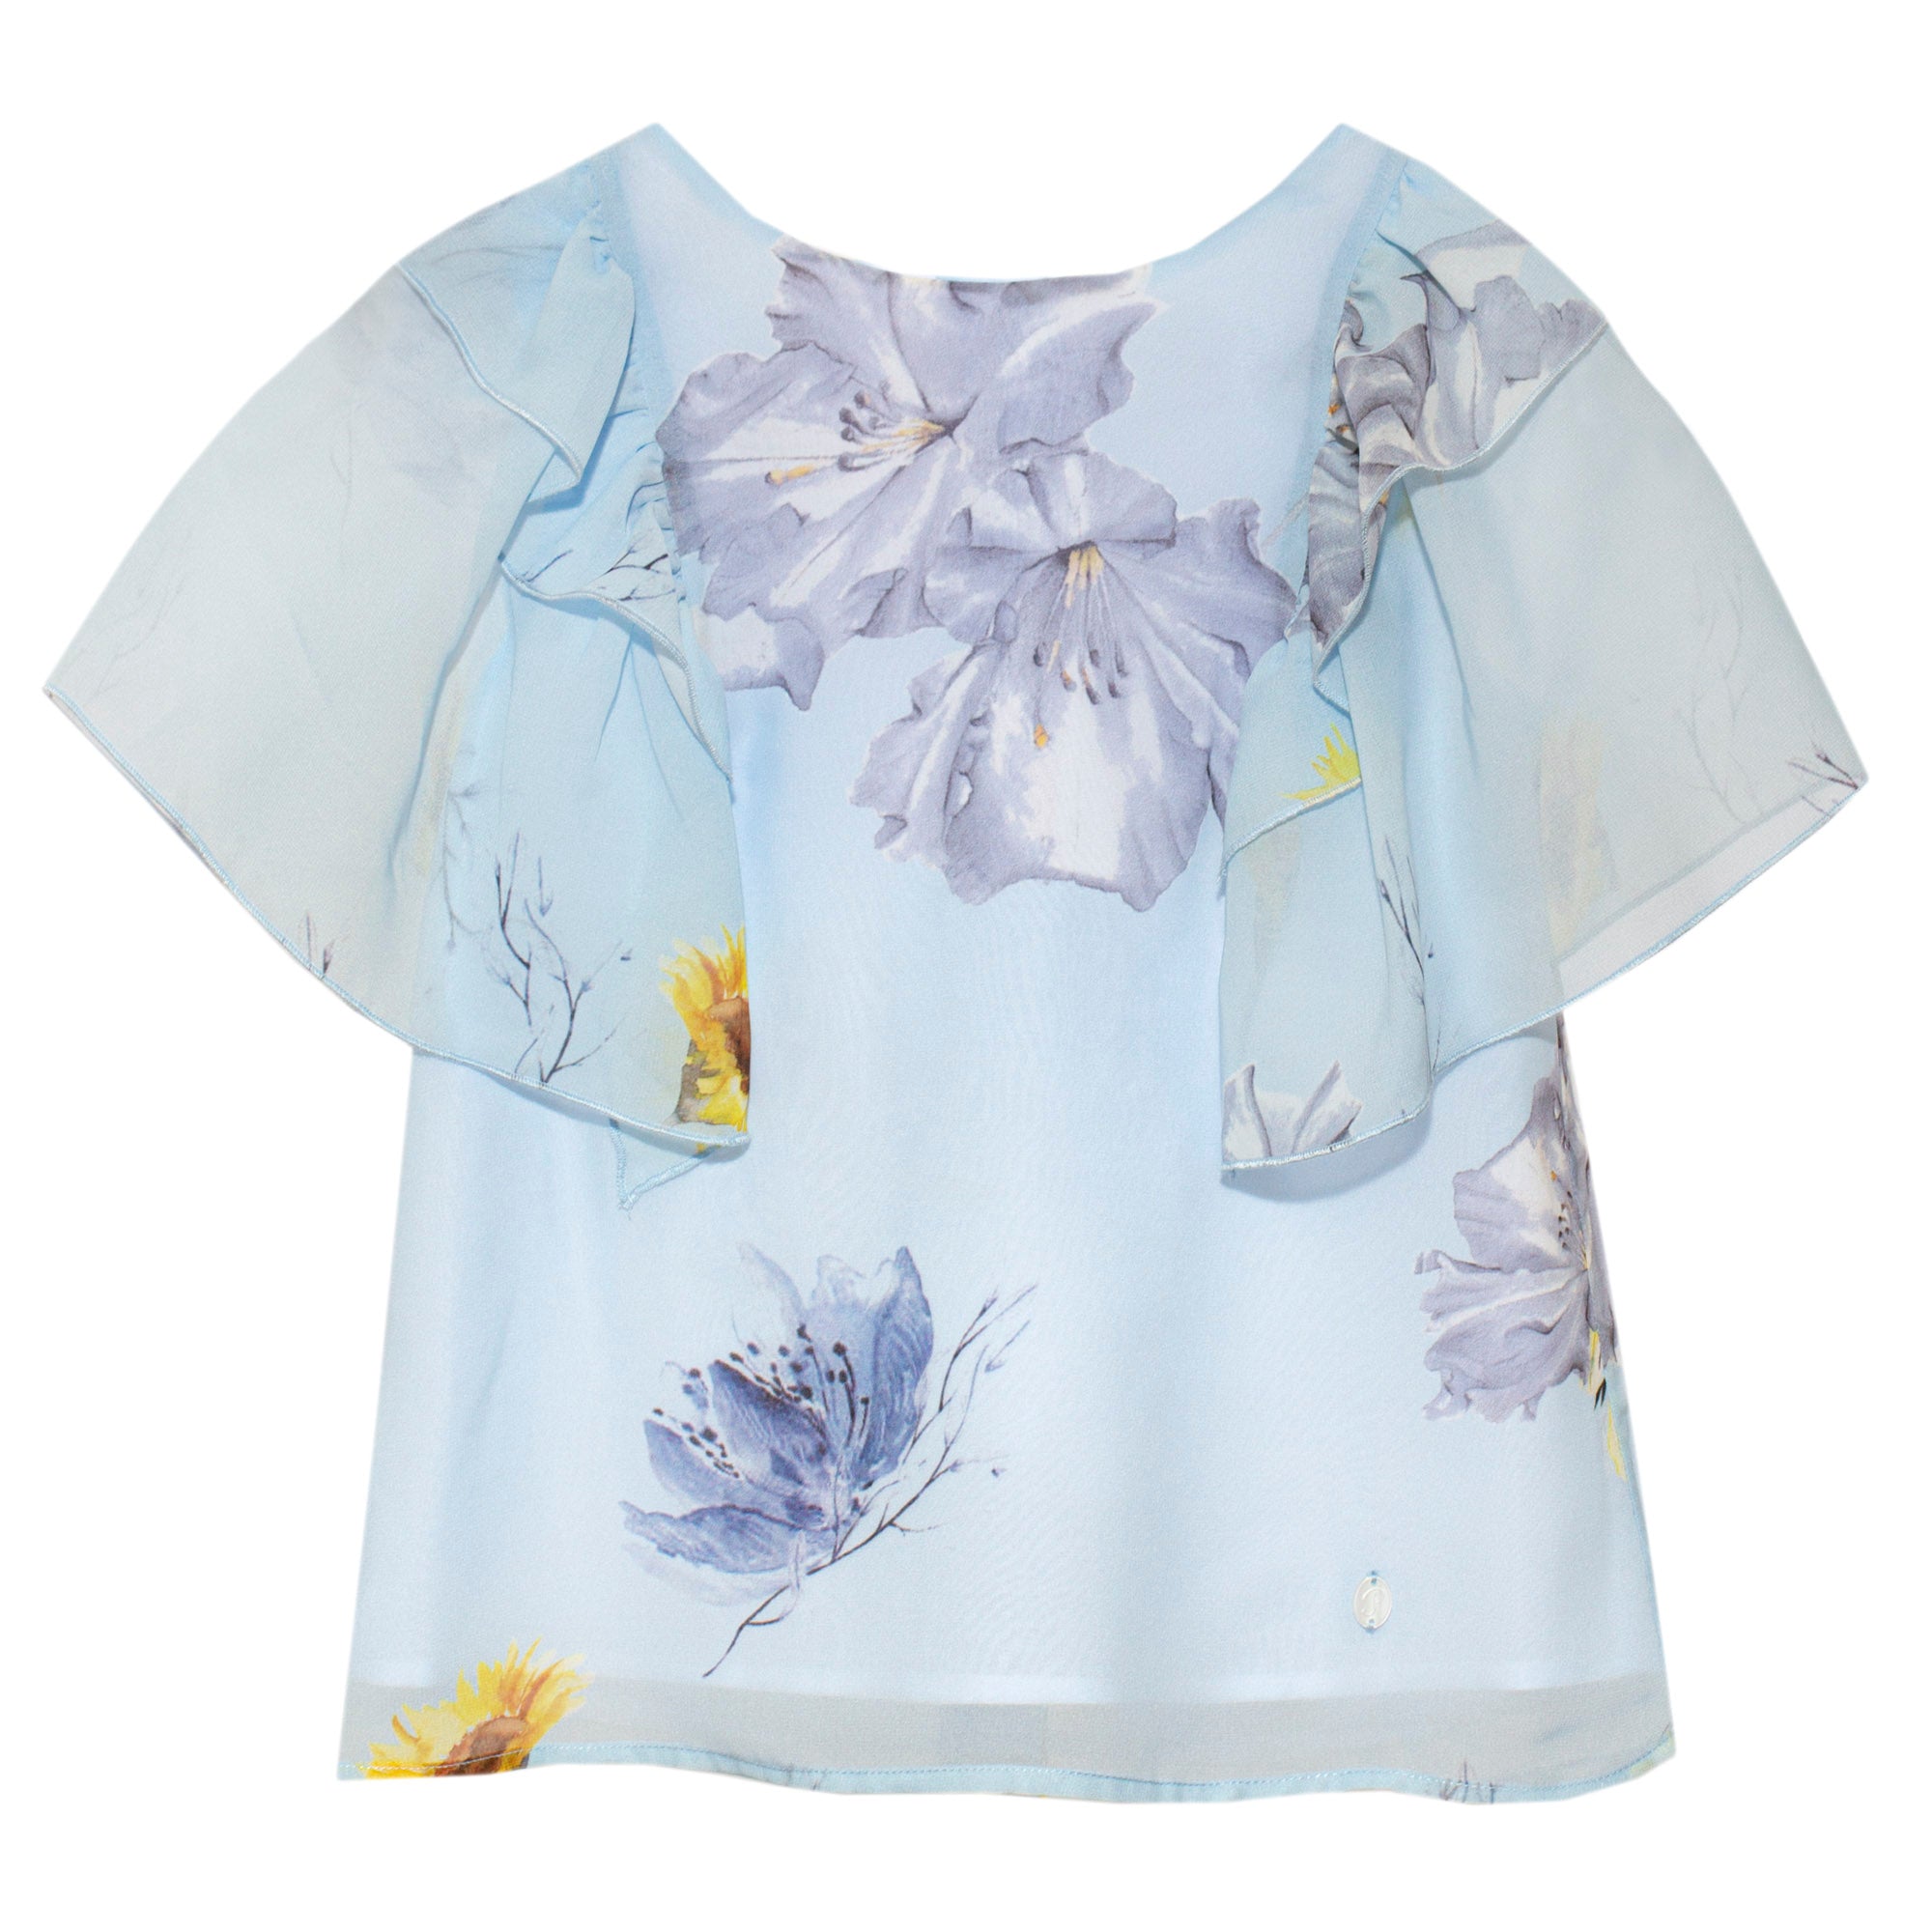 patachou girls floral blouse top